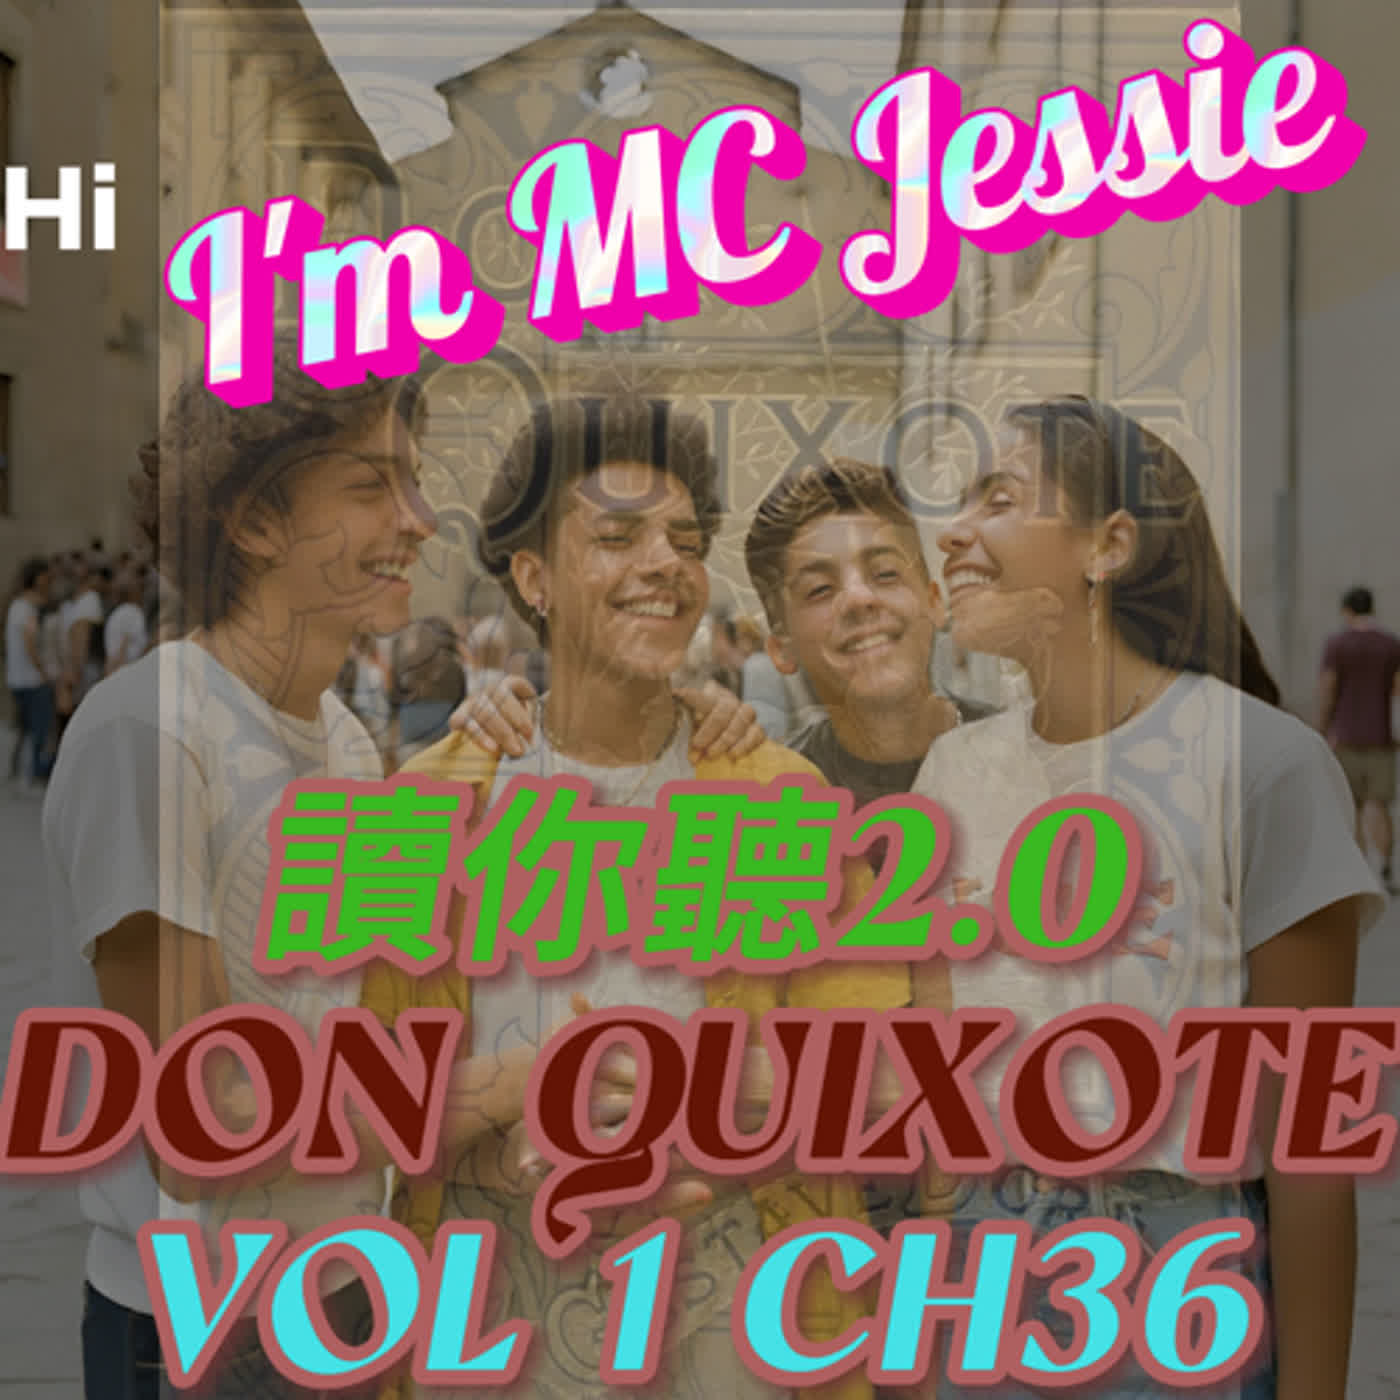 Costa's Audio Book: Miguel de Cervantes "Don Quixote" Volume 1 Chapter 36 讀你聽2.0《唐吉訶德》ft. MC Jessie